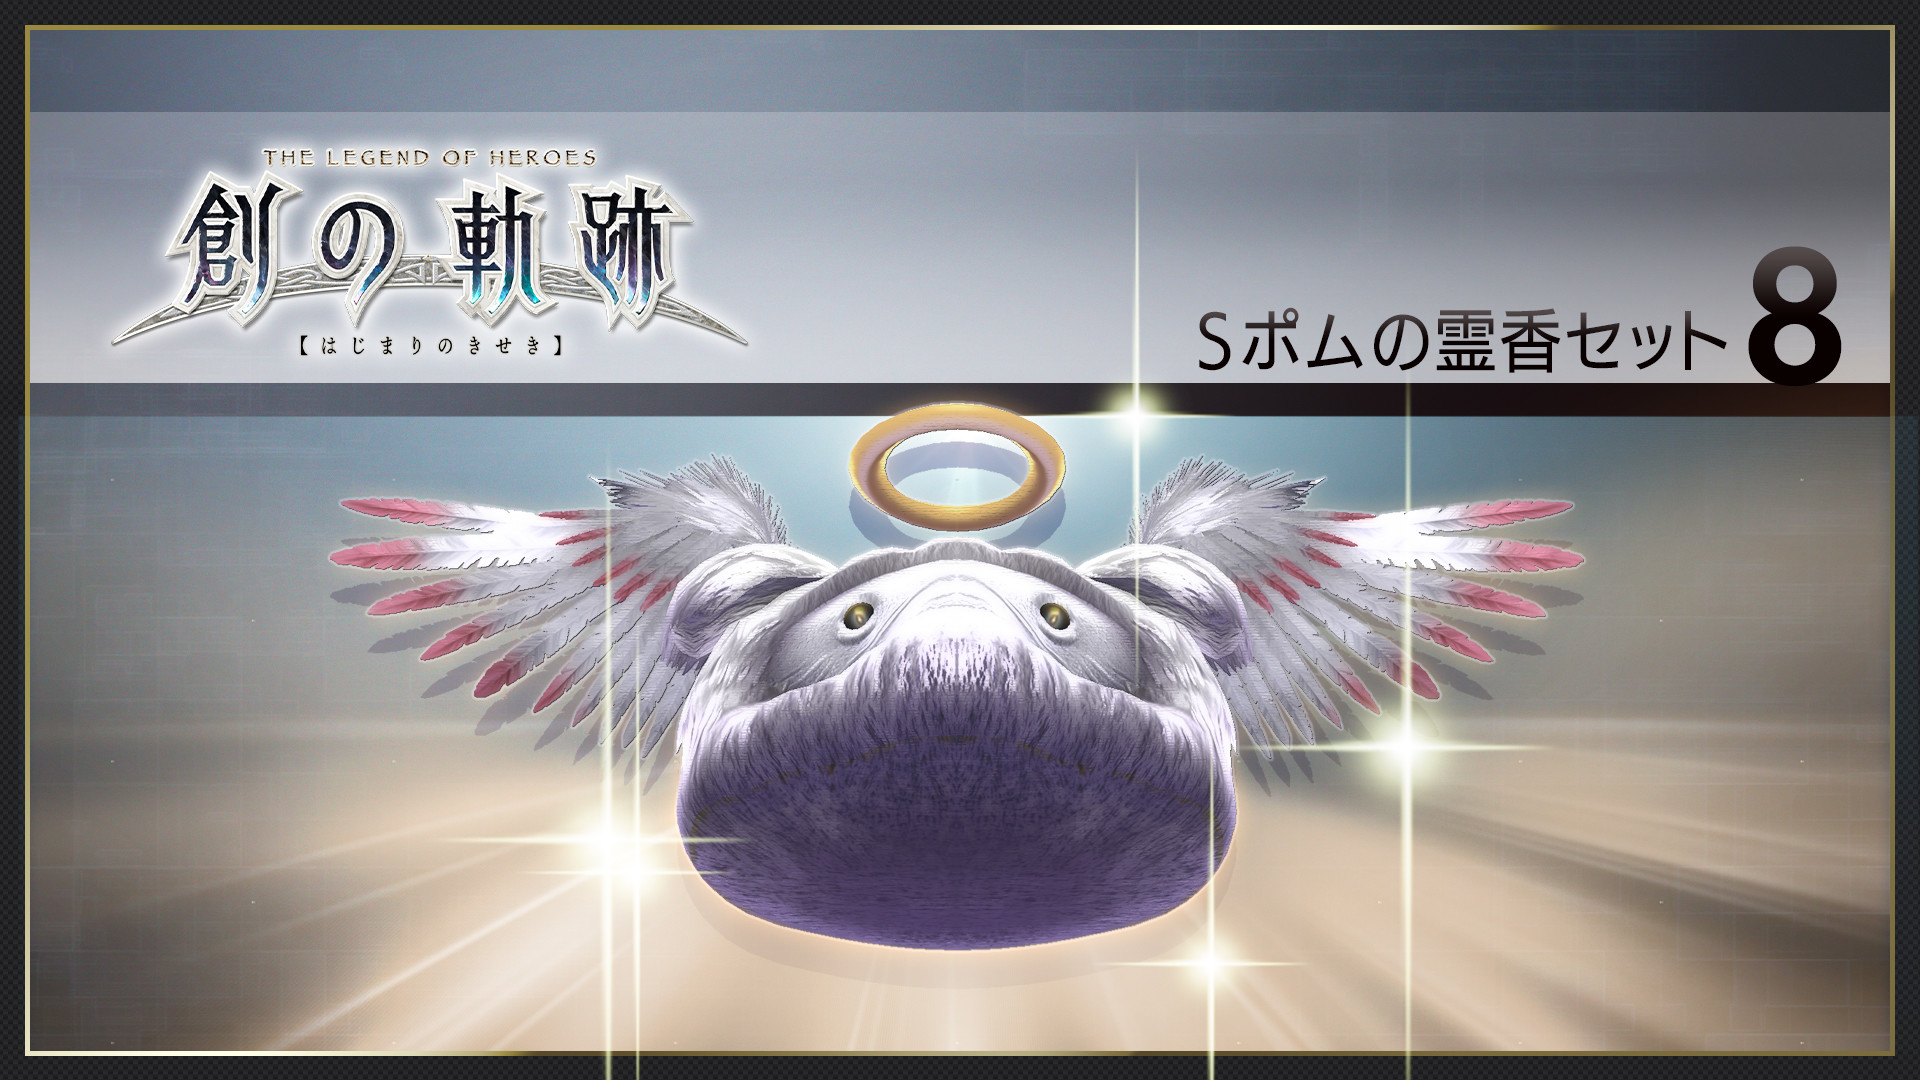 THE LEGEND OF HEROES: HAJIMARI NO KISEKI - Shining Pom Incense Set 8 Featured Screenshot #1